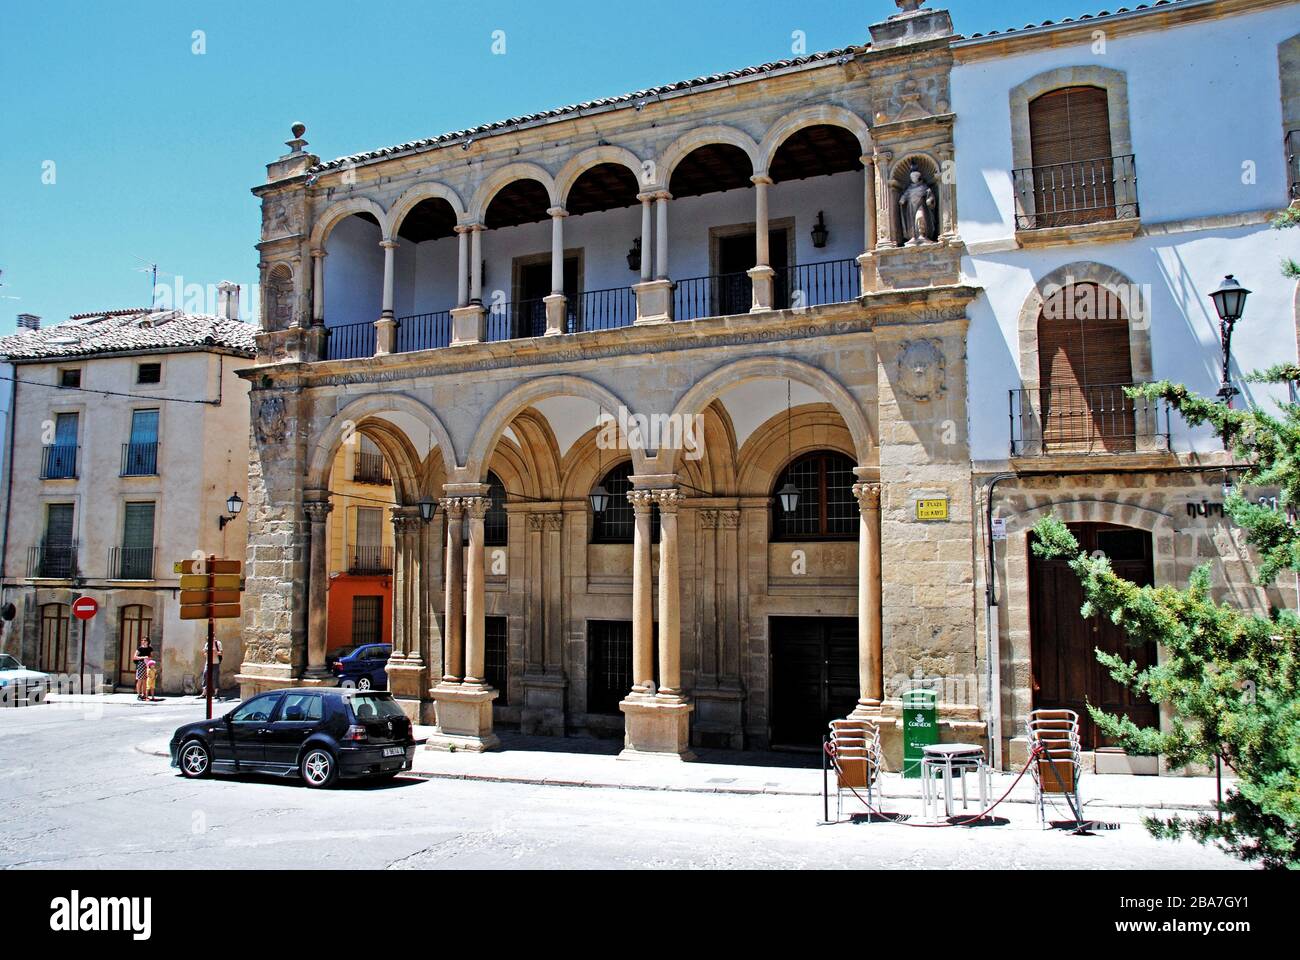 View of the old town hall (antiguas casas consistoriales) in the Plaza Primero de Mayo, Ubeda, Spain. Stock Photo